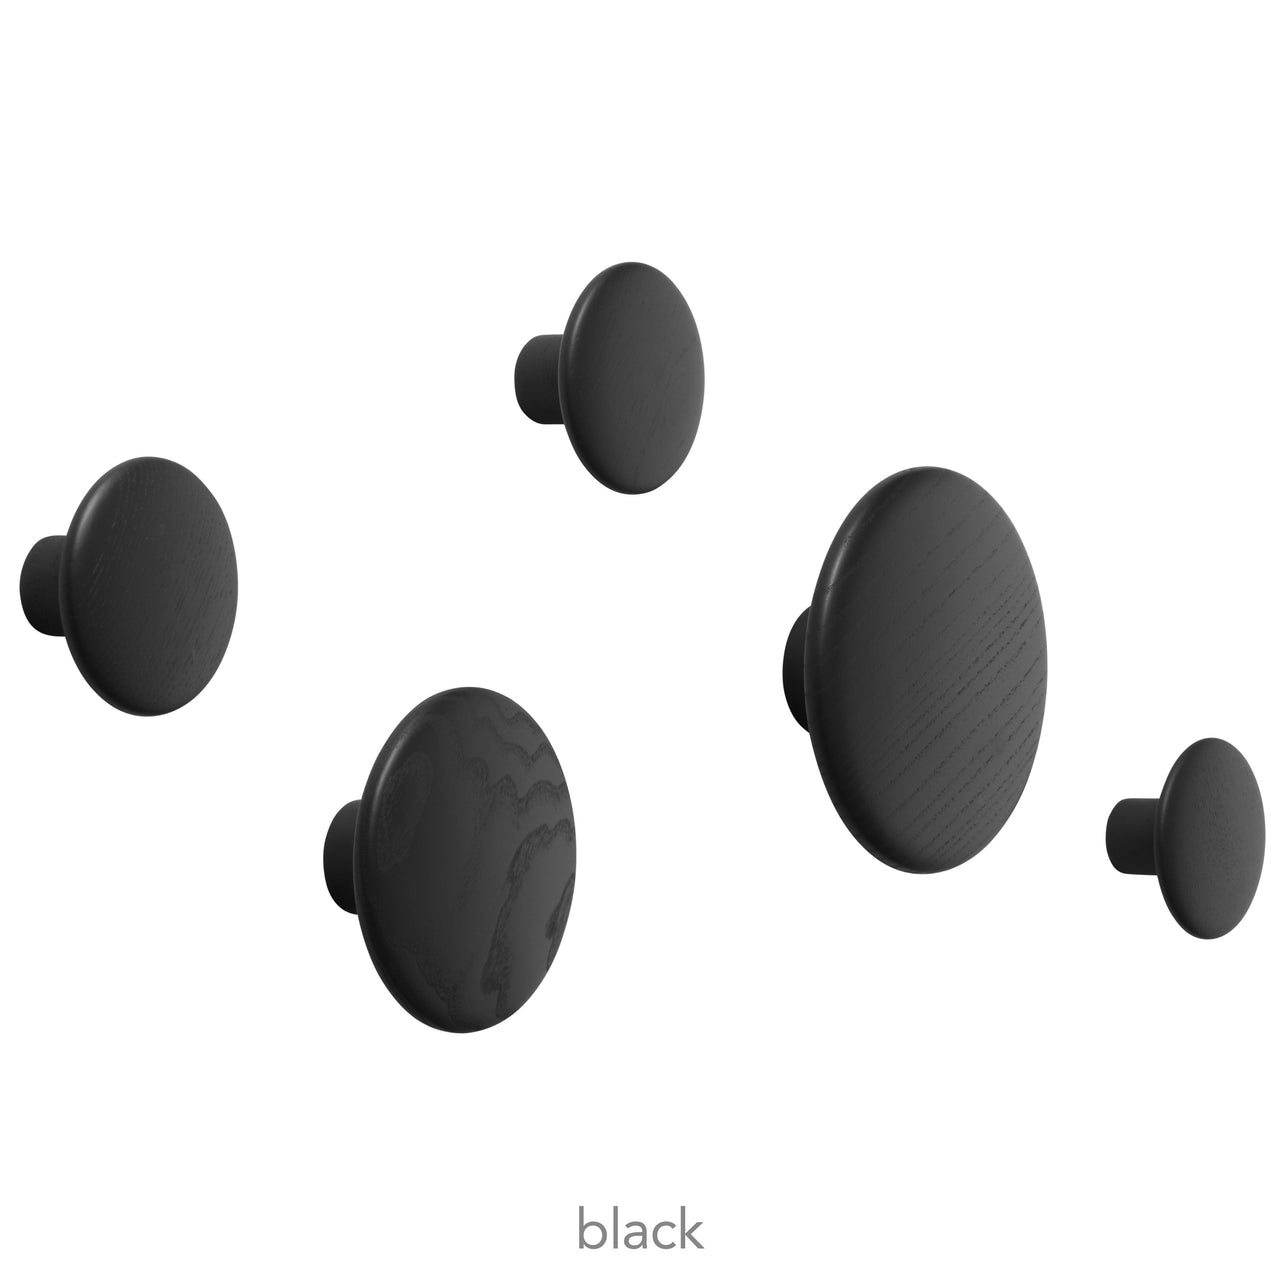 The Dots Wall Hooks: Mixed Set of 5 + Black 